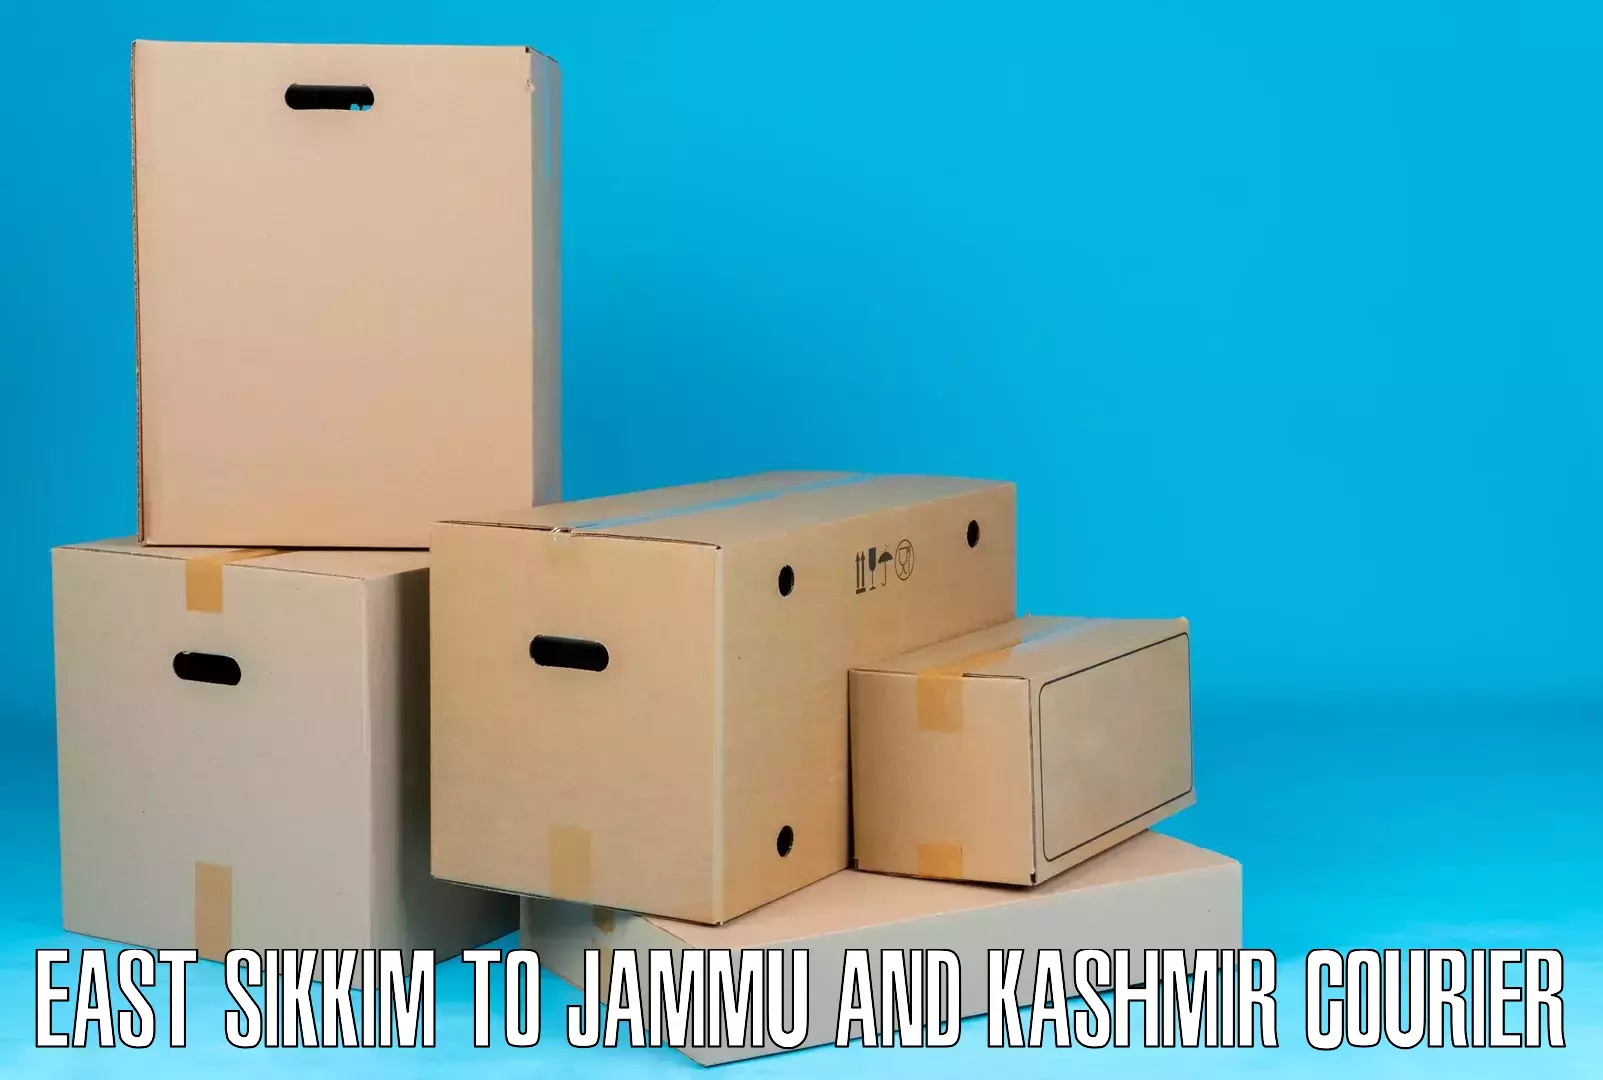 Large package courier East Sikkim to Kishtwar